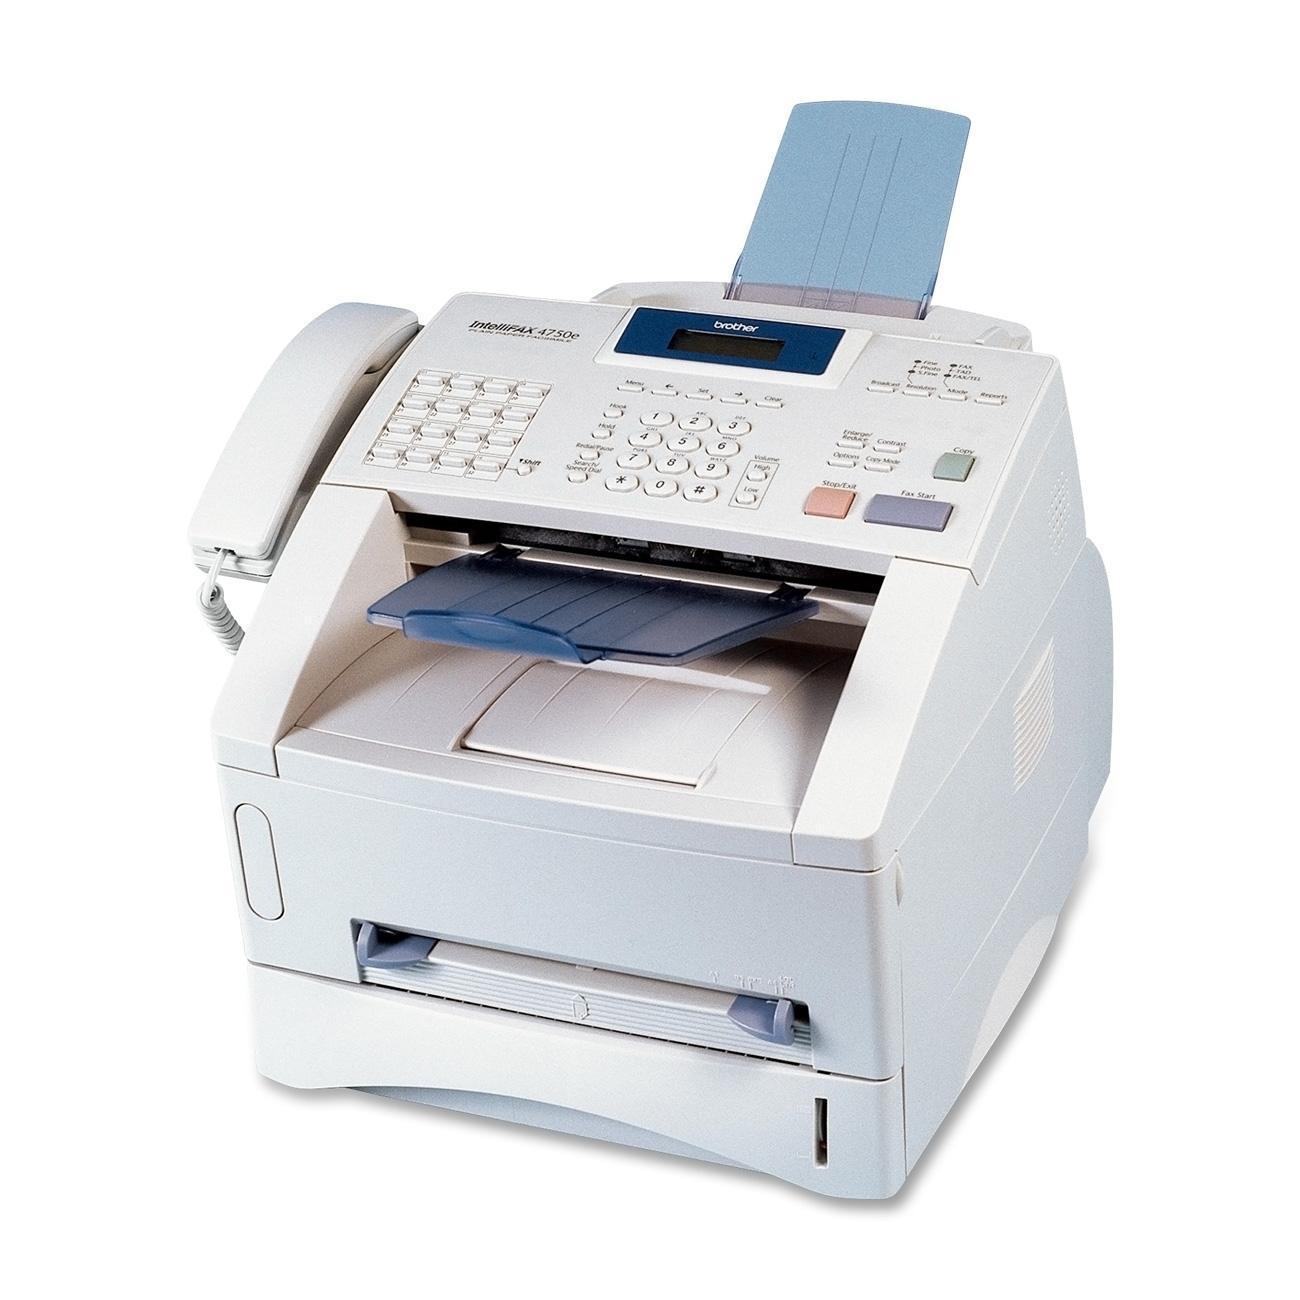 Brother IntelliFAX 4750e Laser Multifunction Printer - Monochrome - Plain Paper Print - Desktop, Off White